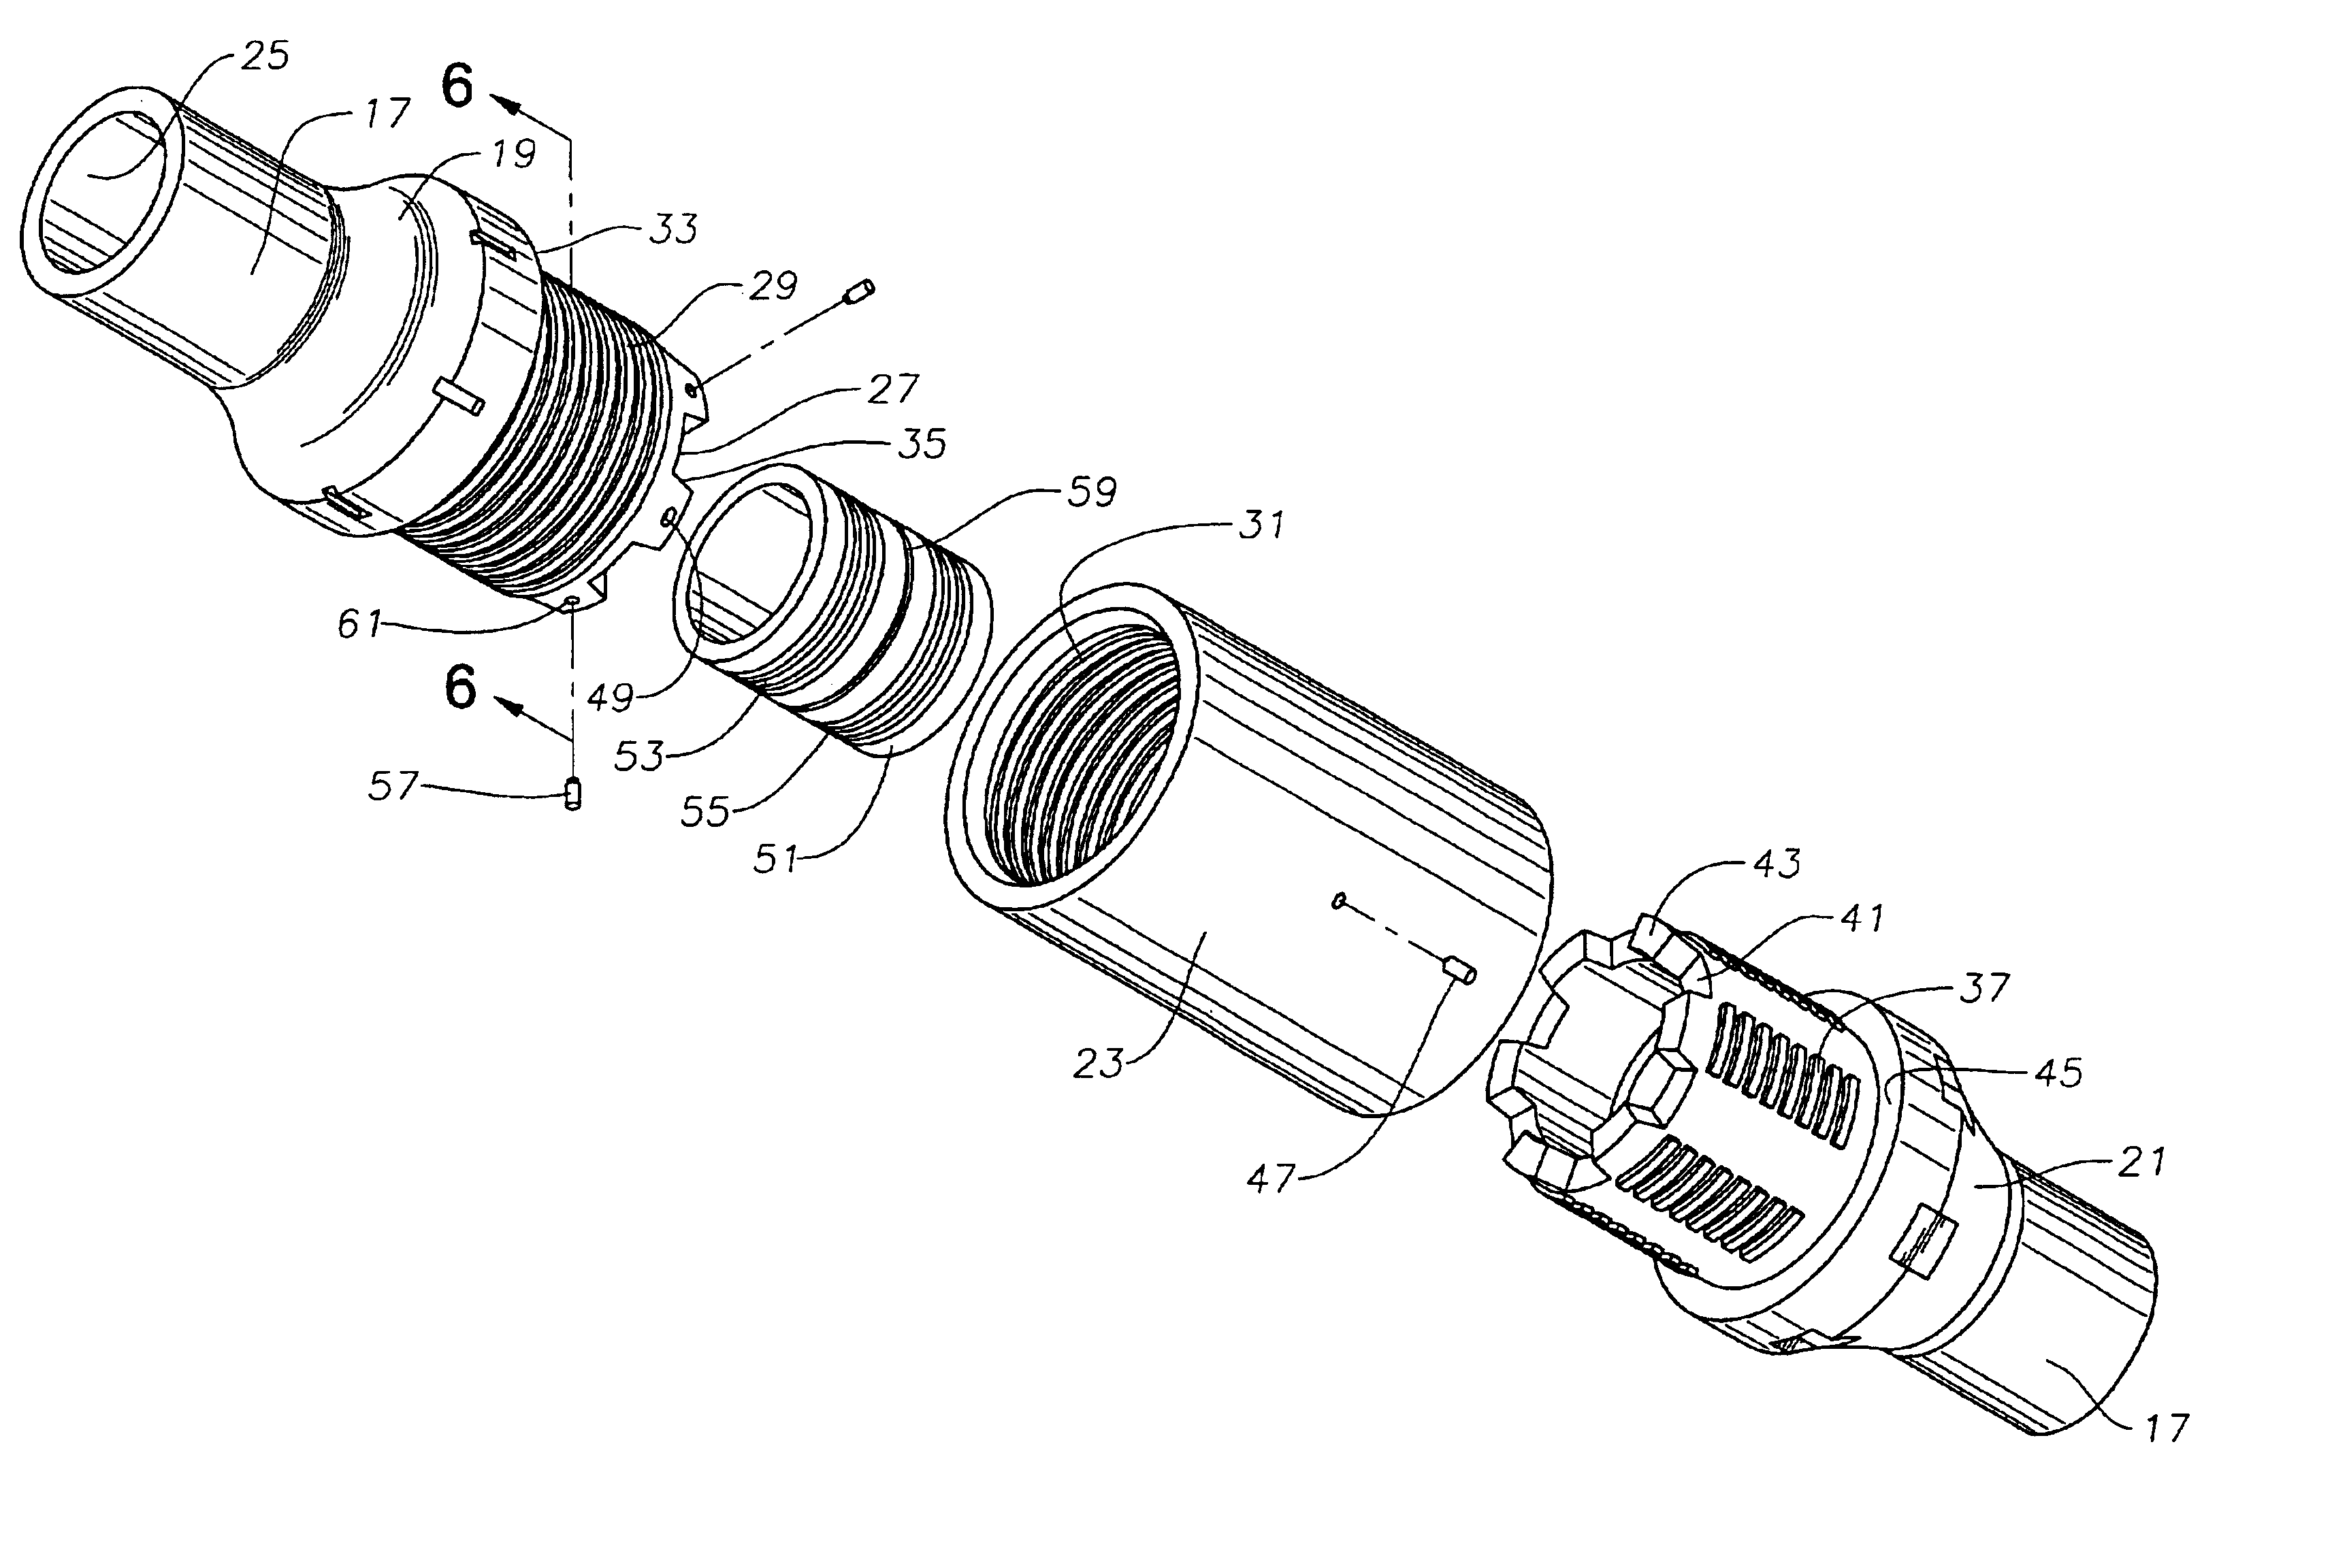 Breech lock connector for a subsea riser